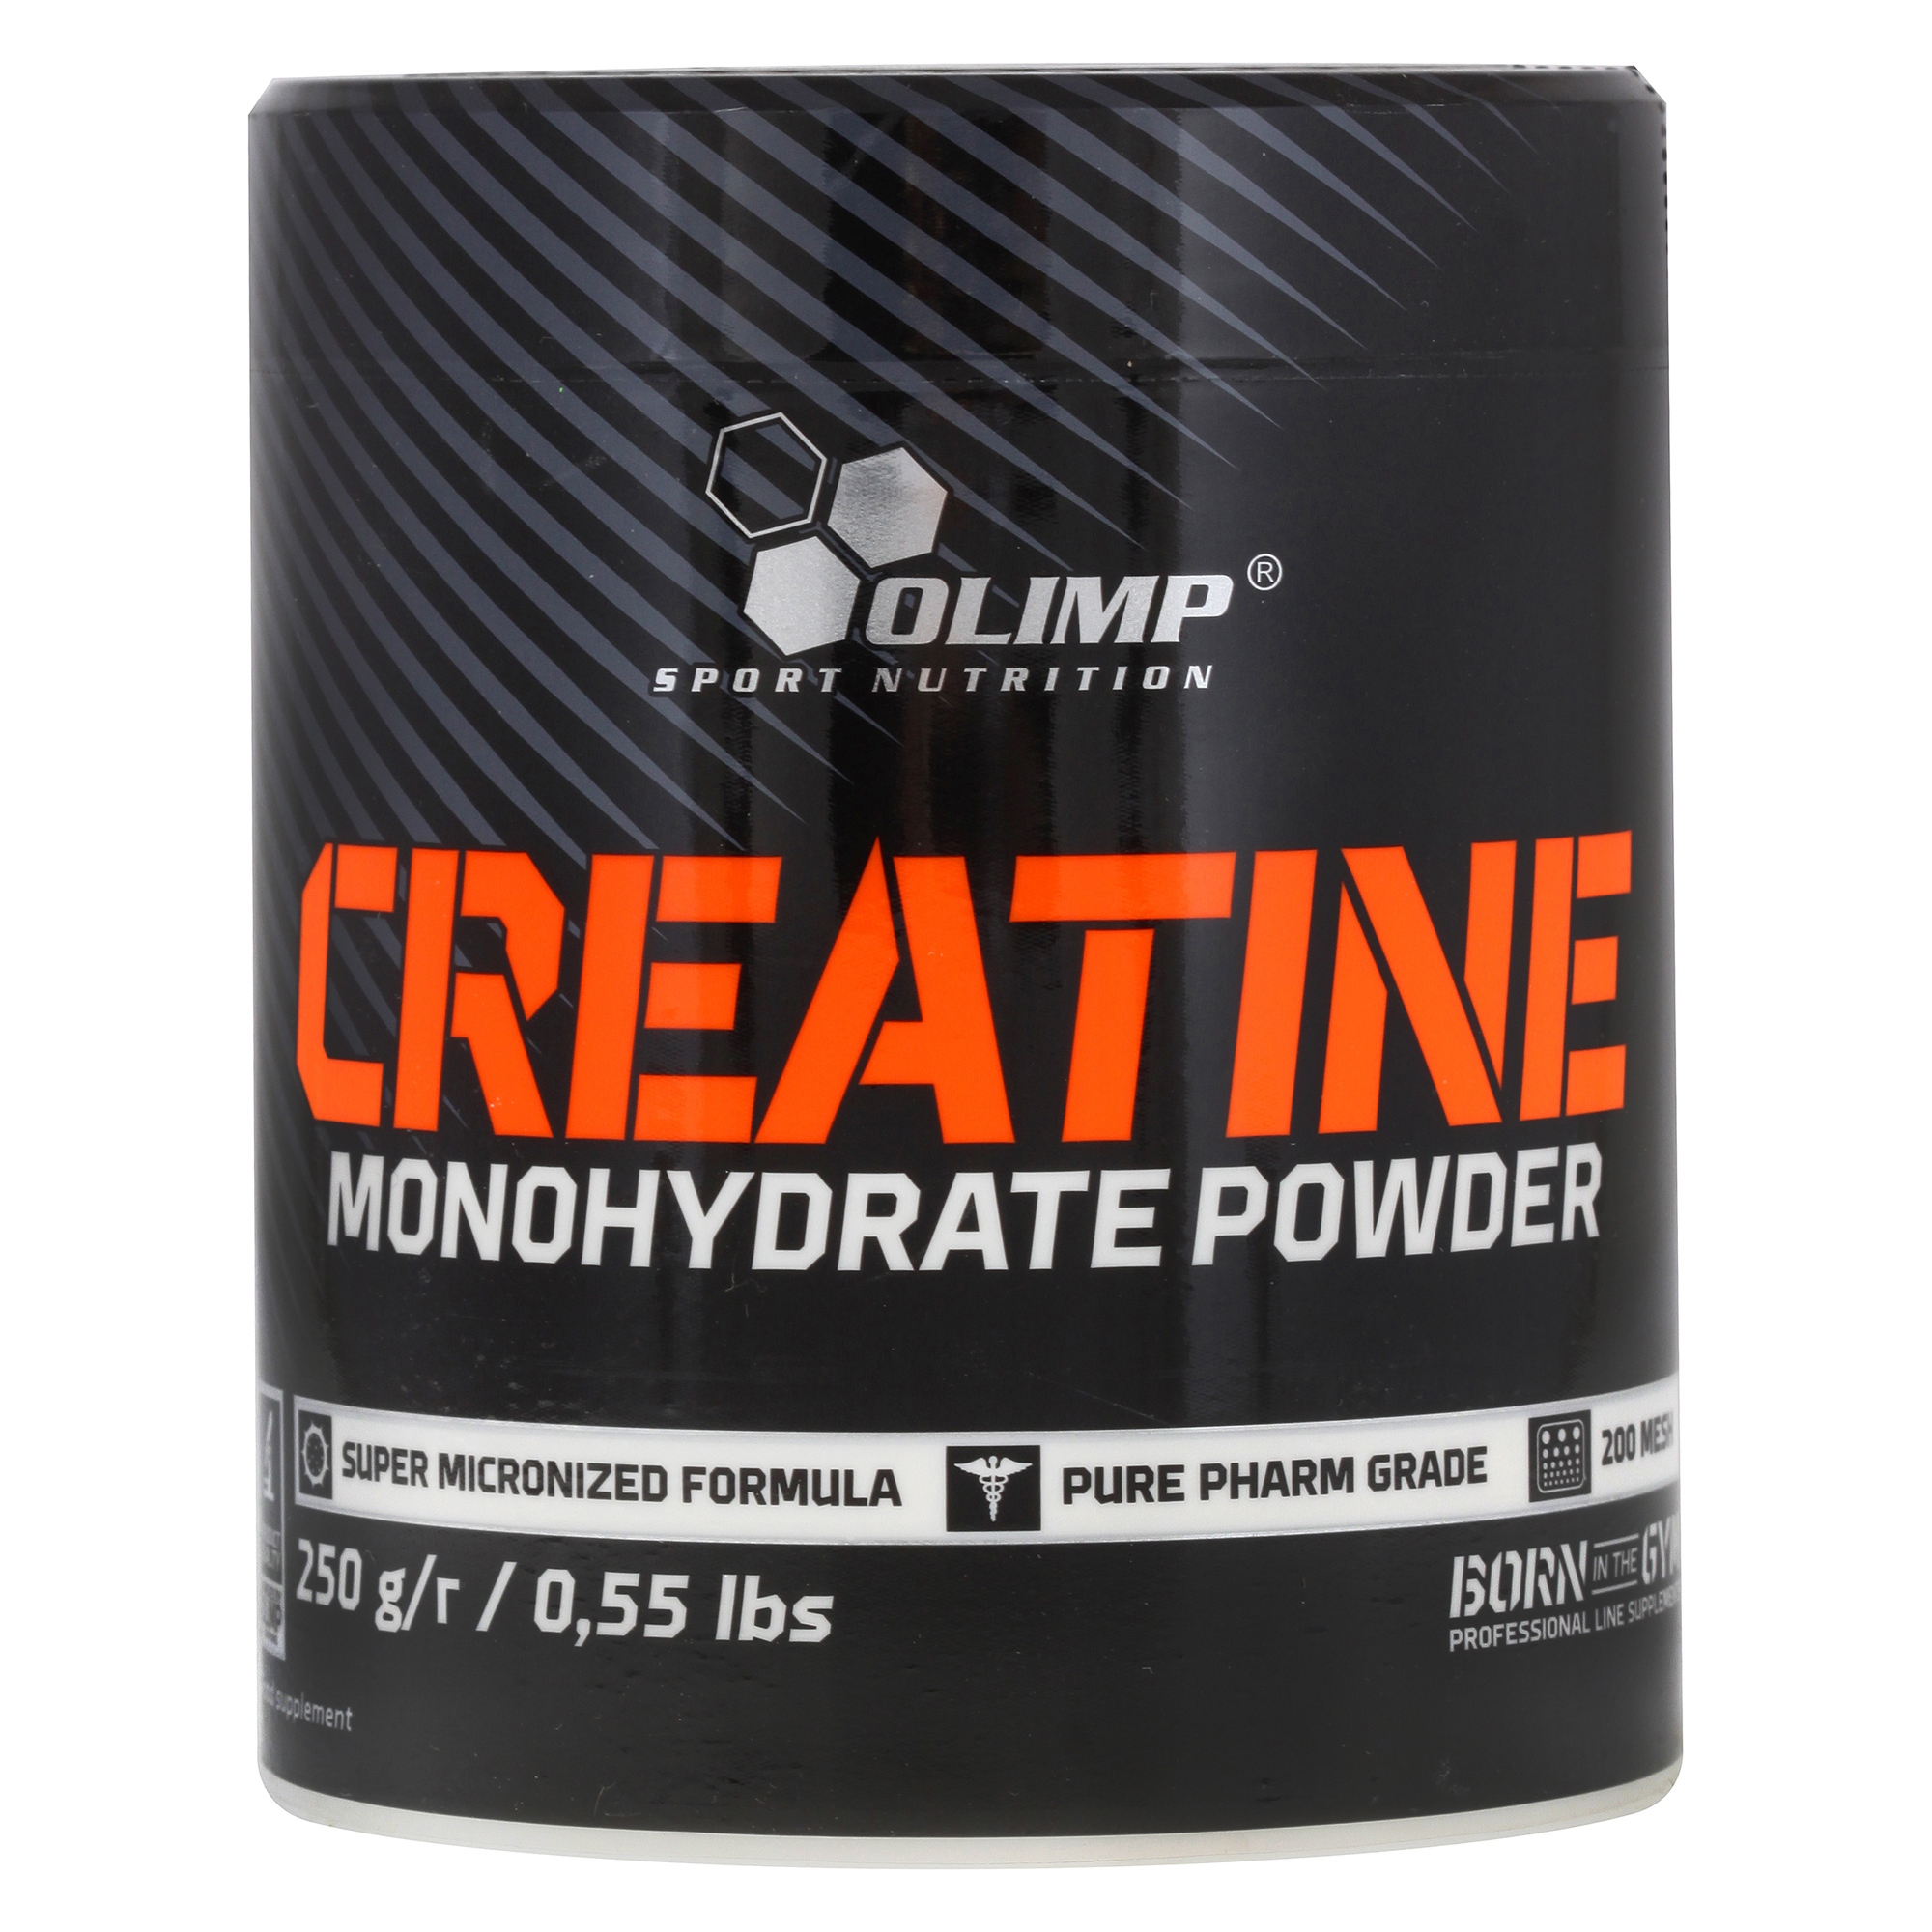 Креатин Olimp Creatine Monohydrate Powder, 250 г, unflavored